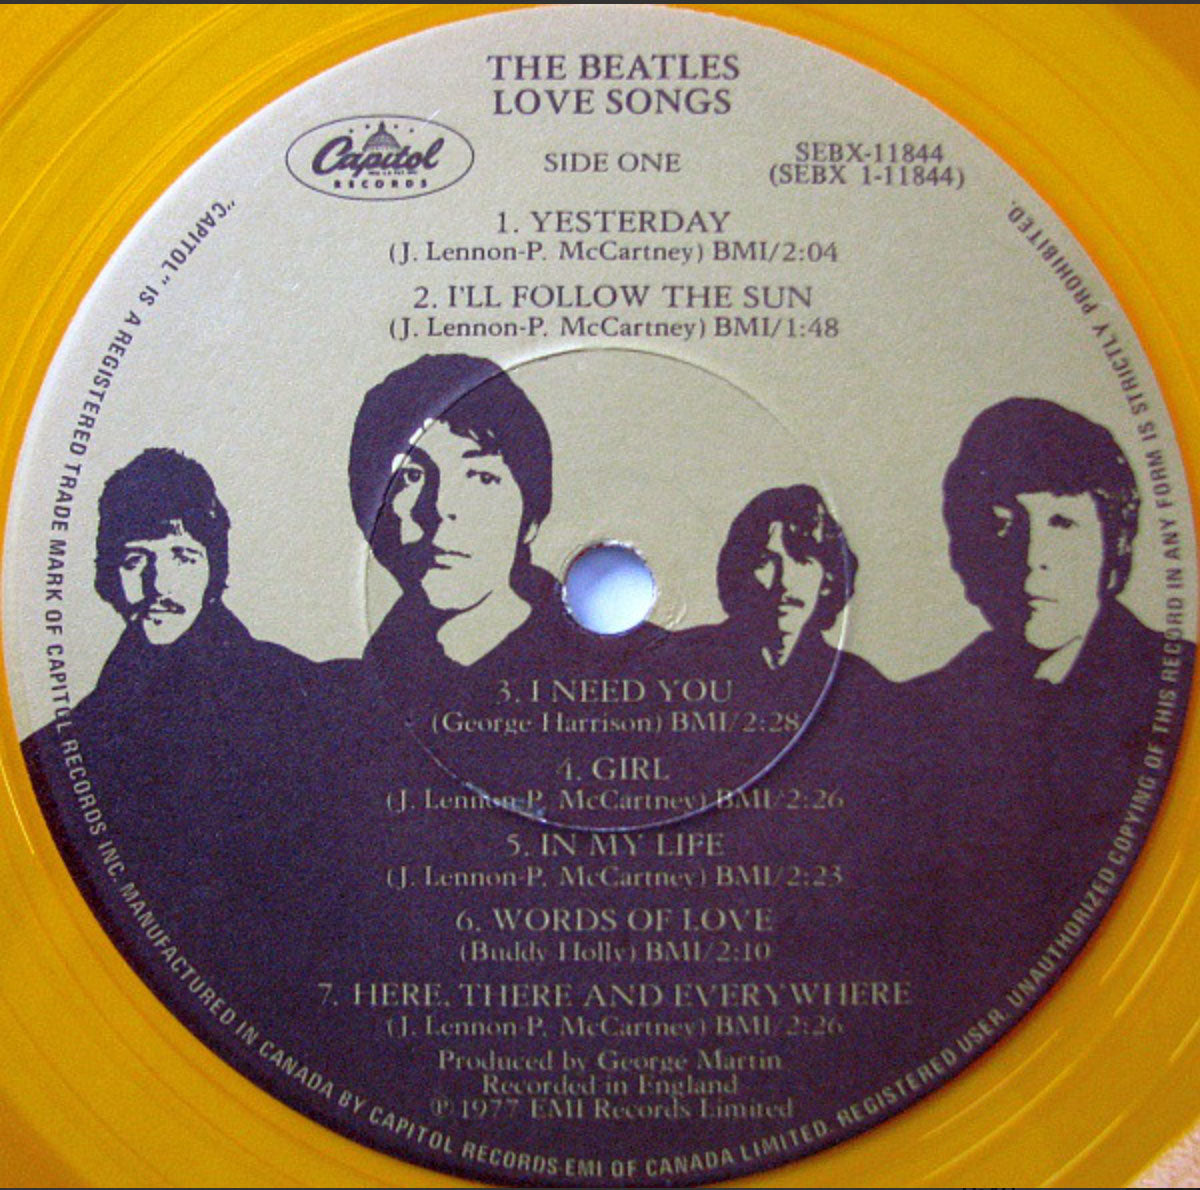 The Beatles - Love Songs - 1977 GOLD VINYL